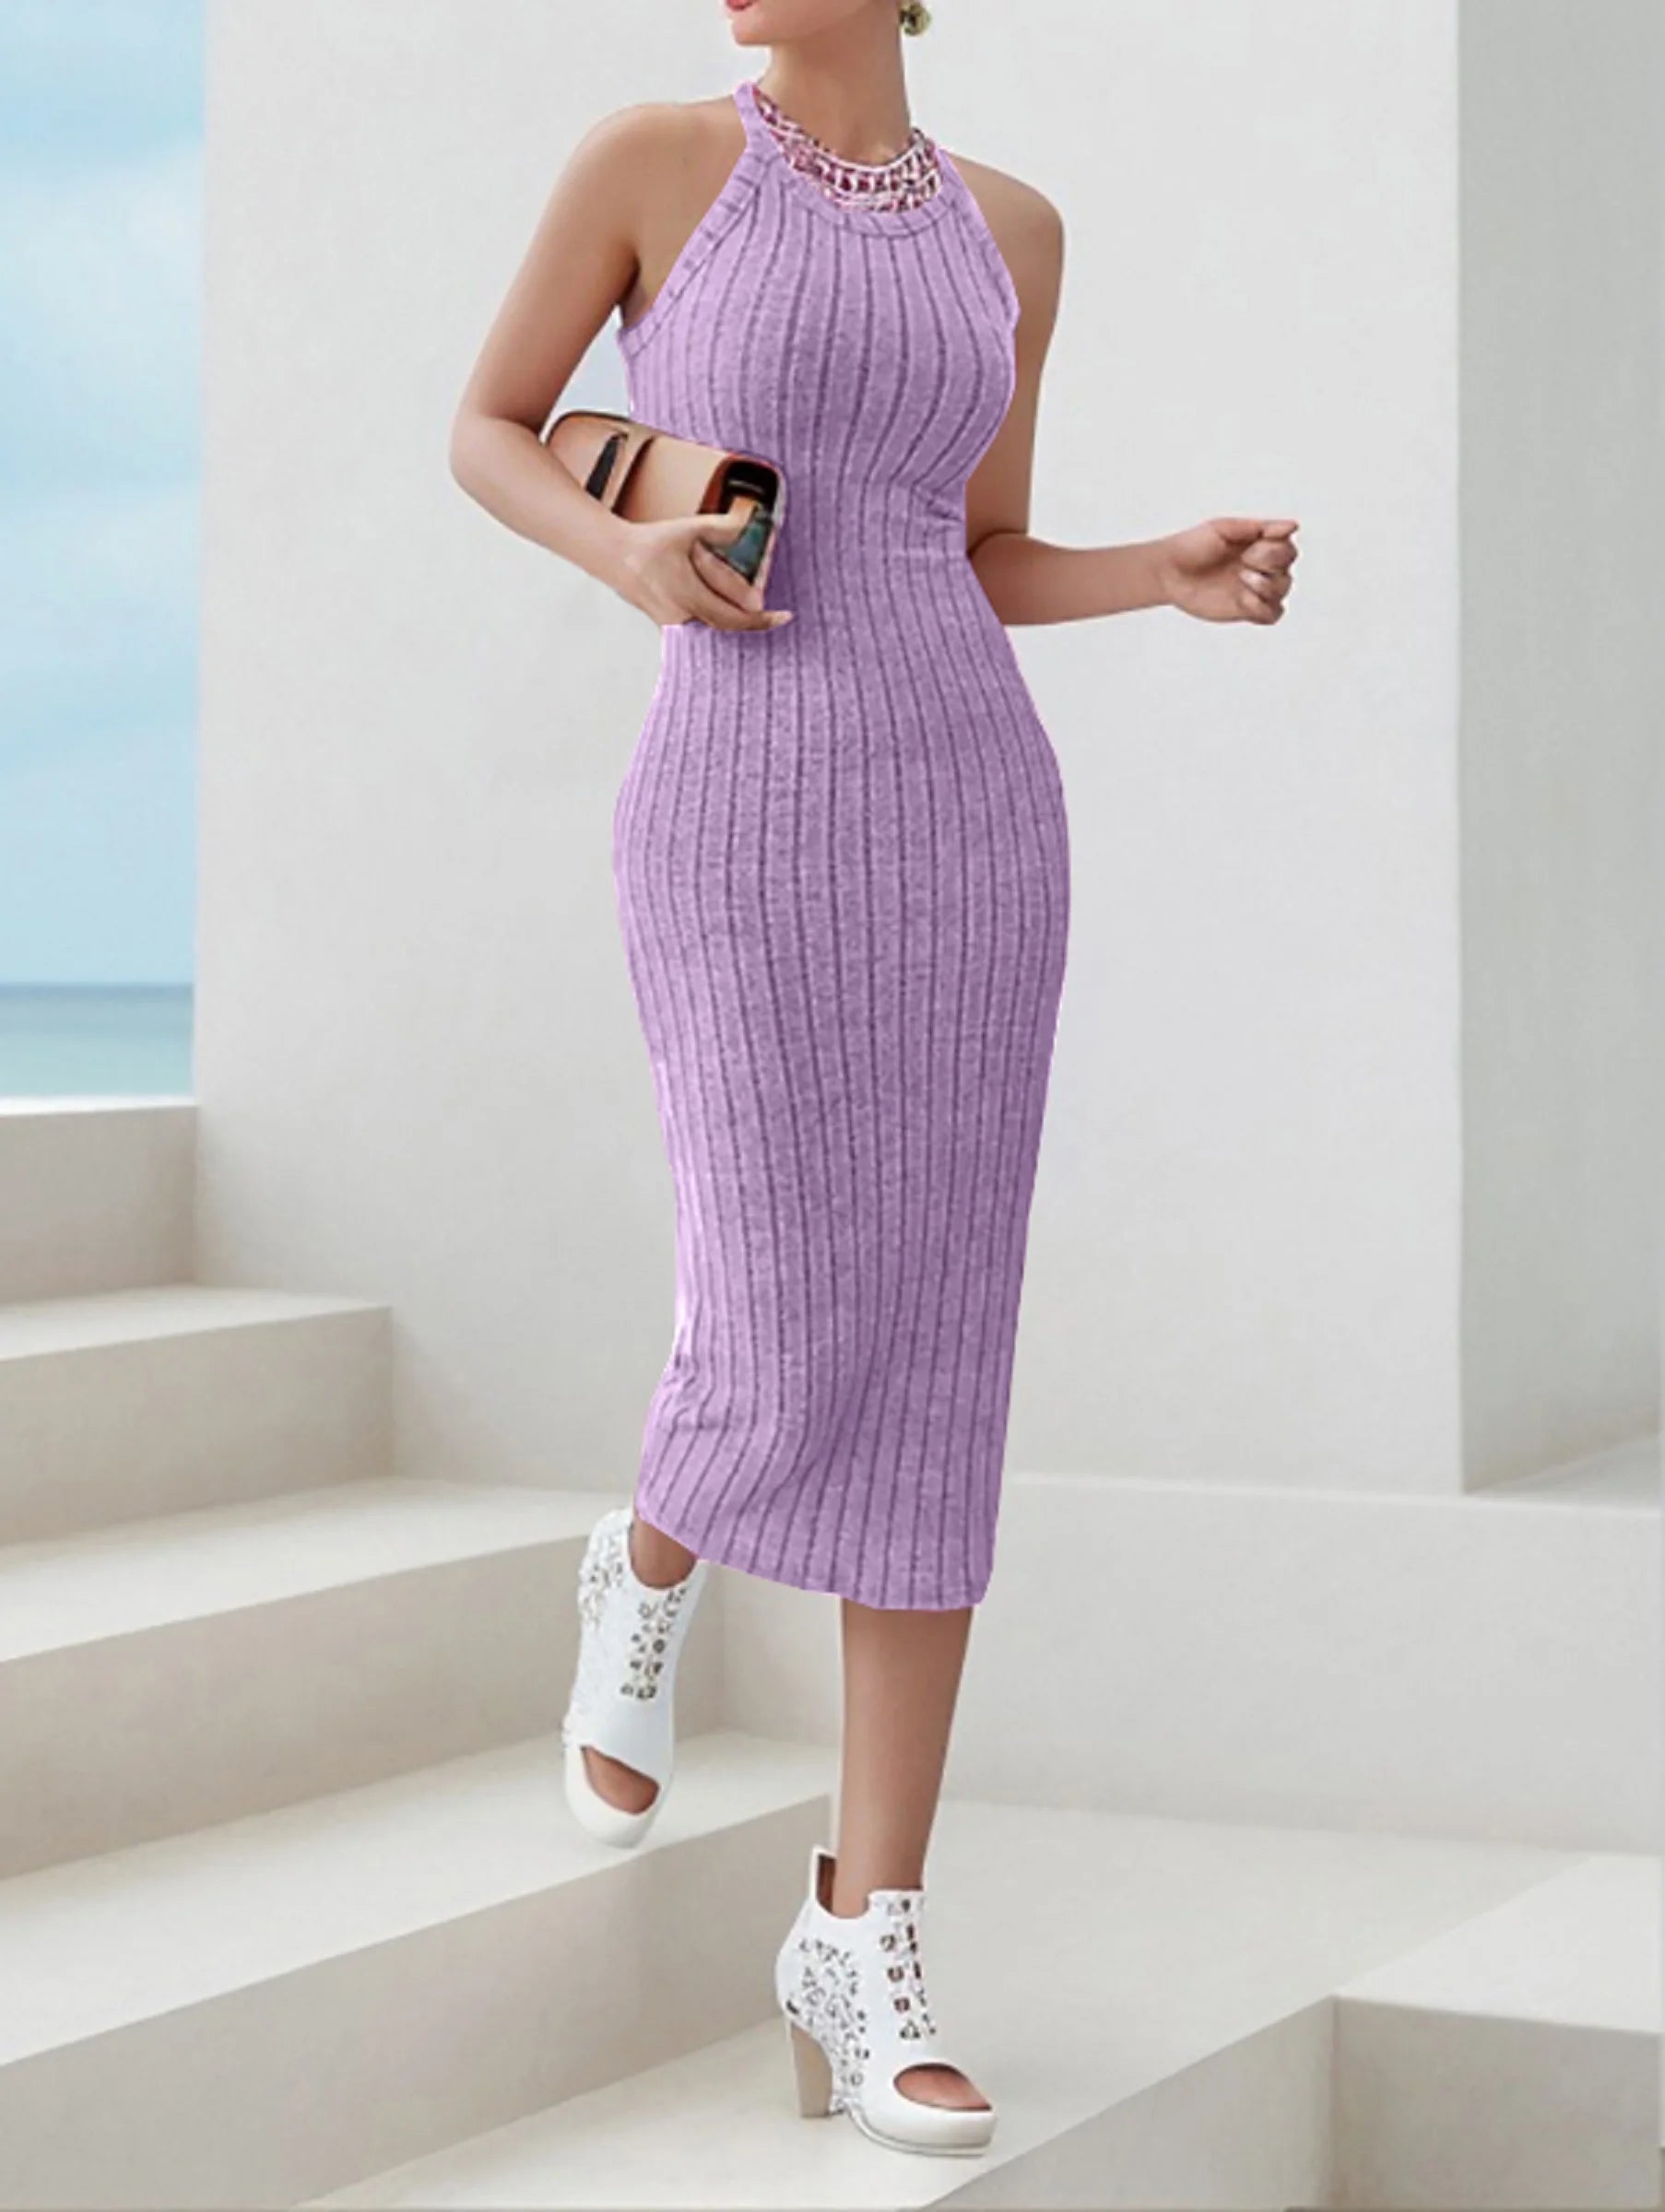 Dresses for women | Sleeveless knit dress with collar | Begogi Shop |